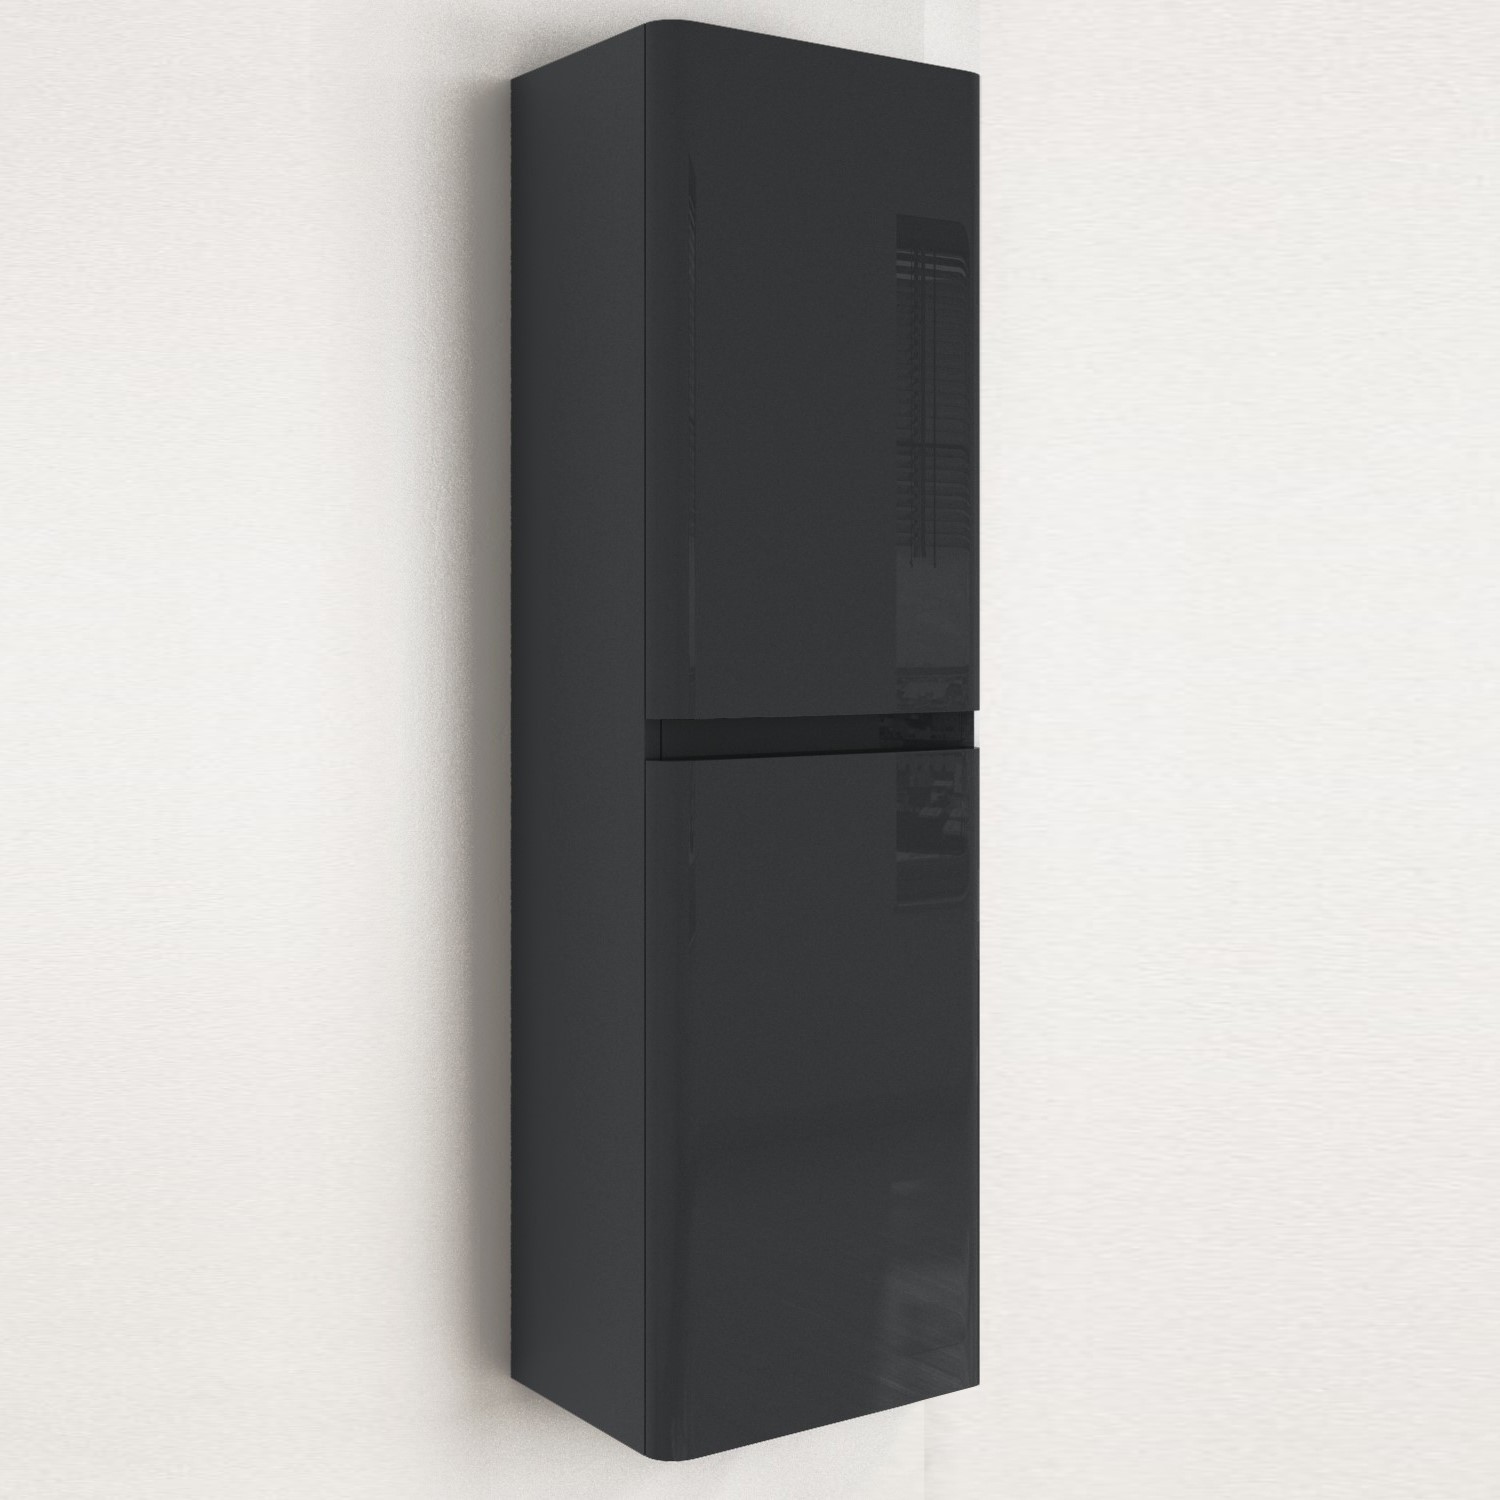 Dark Grey Wall Hung Tall Bathroom Cabinet 400mm - Pendle